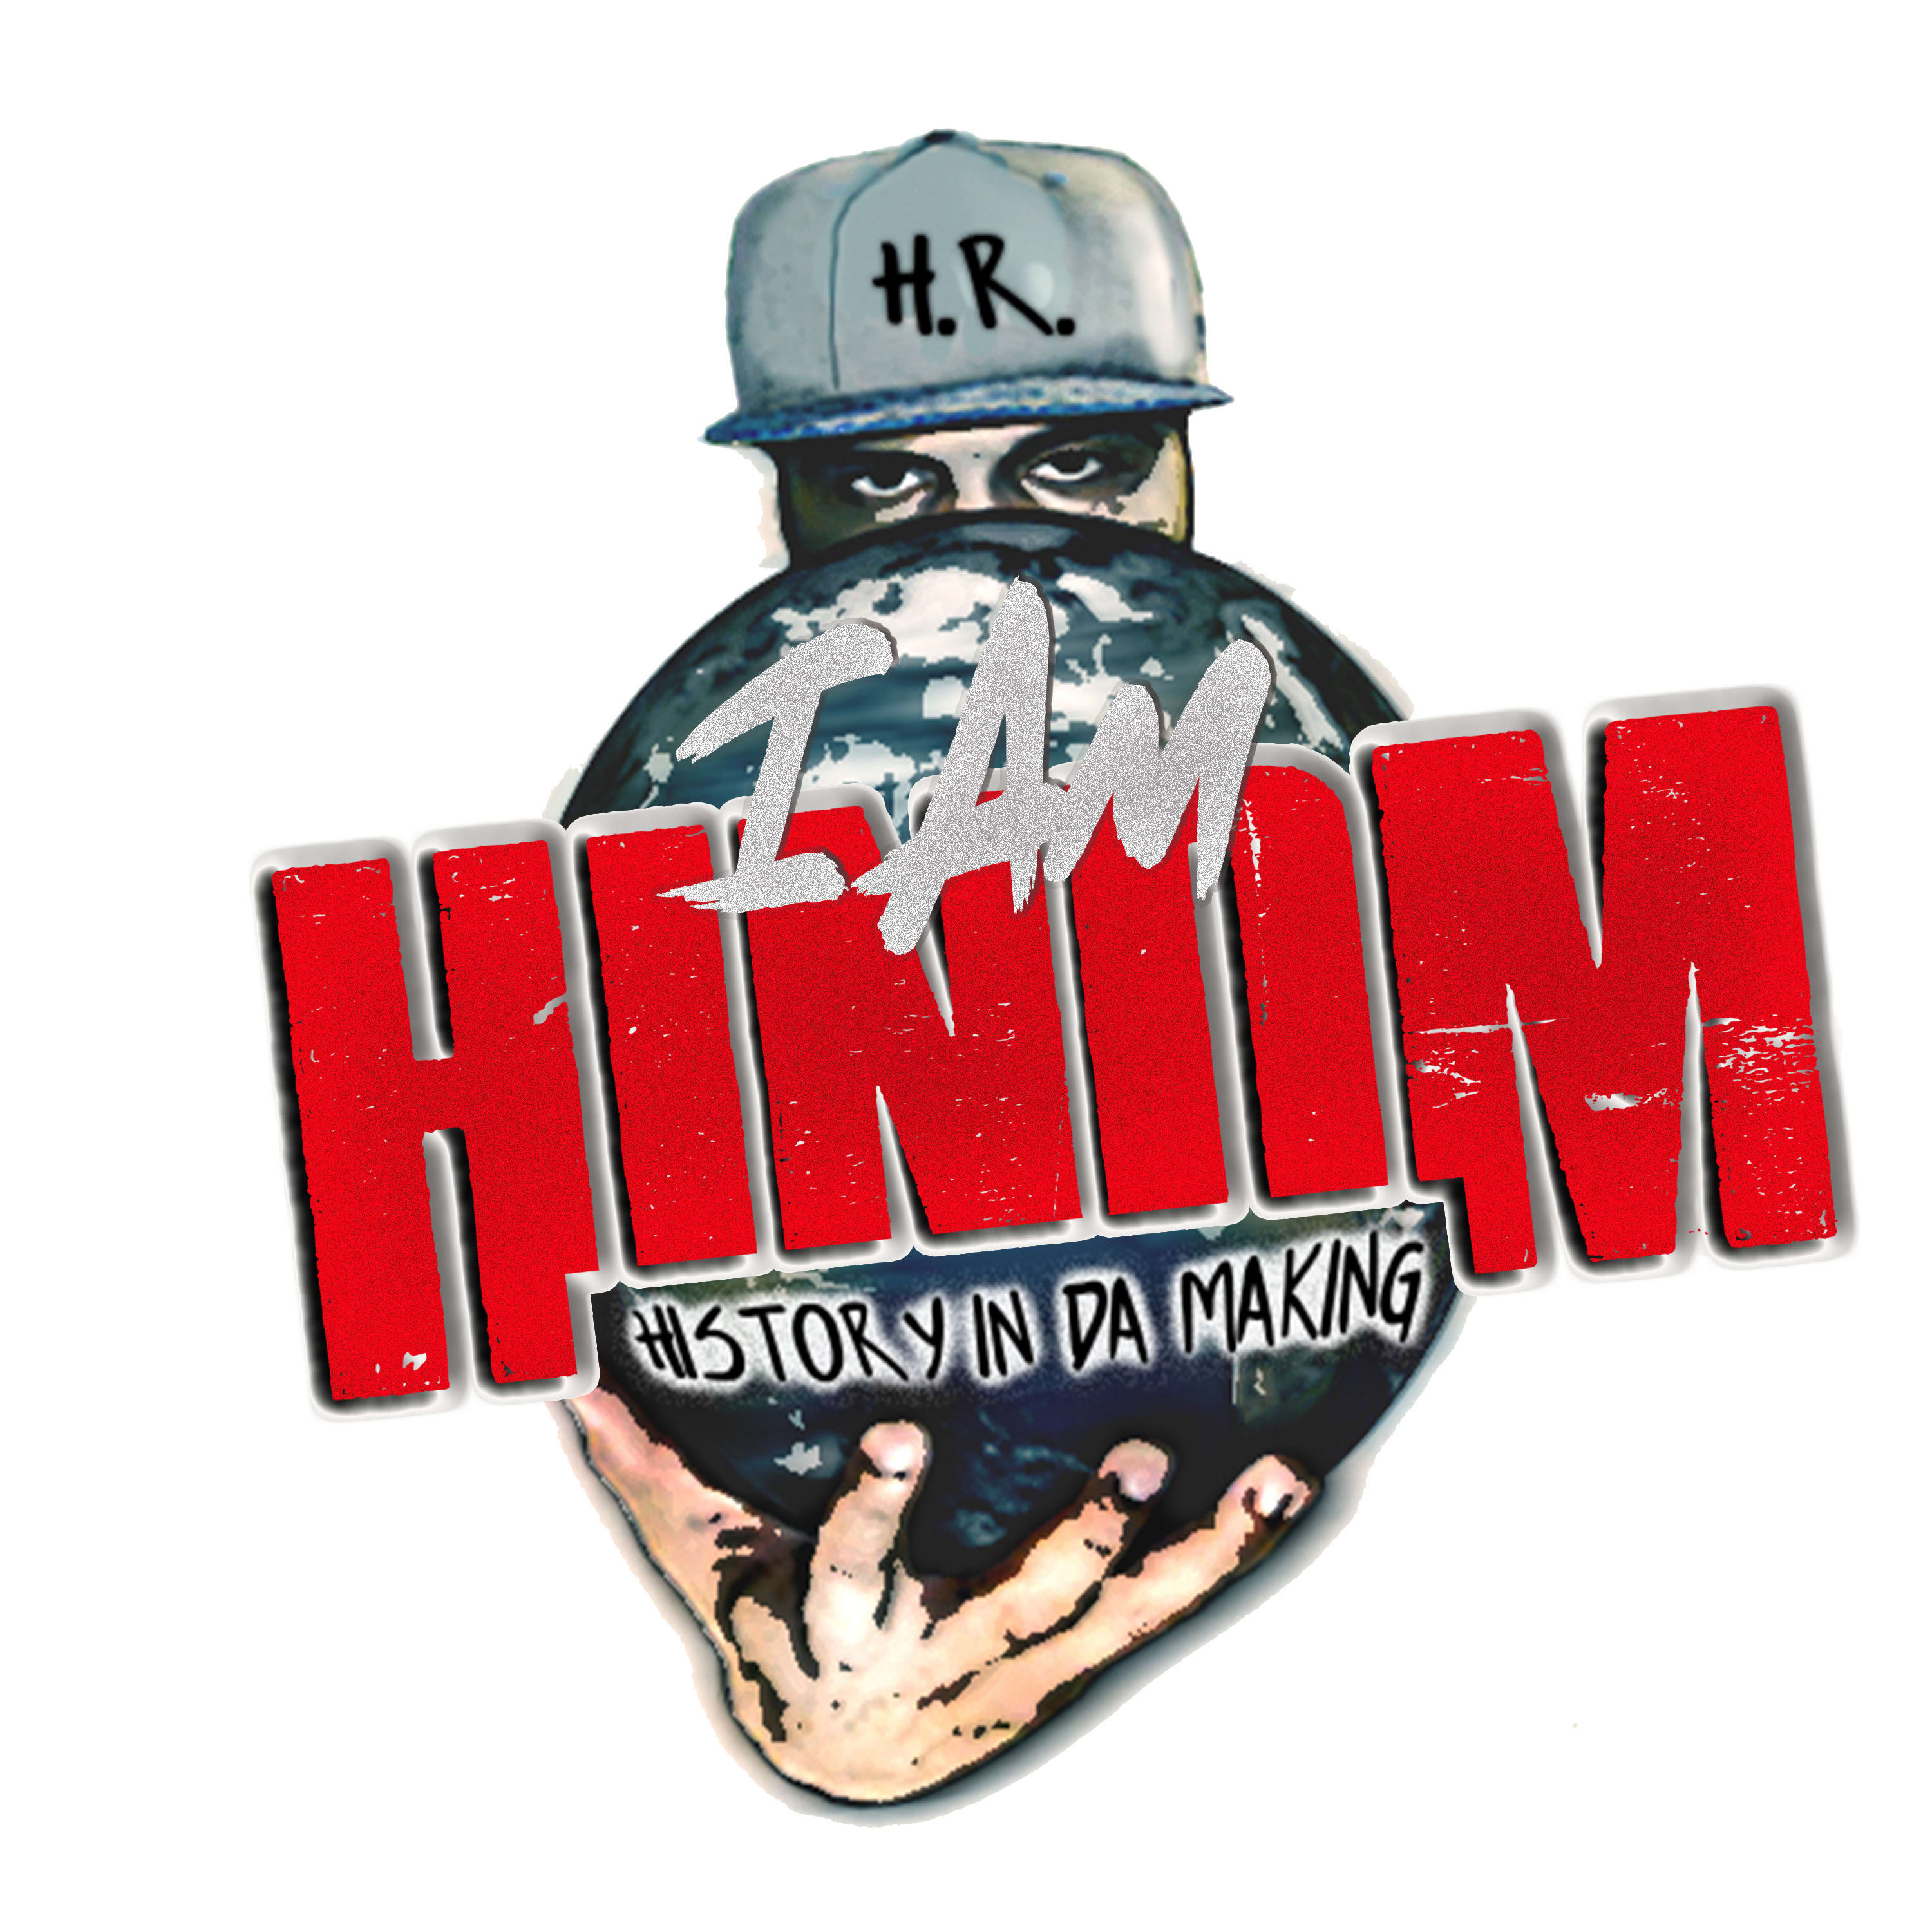 Hindm Records